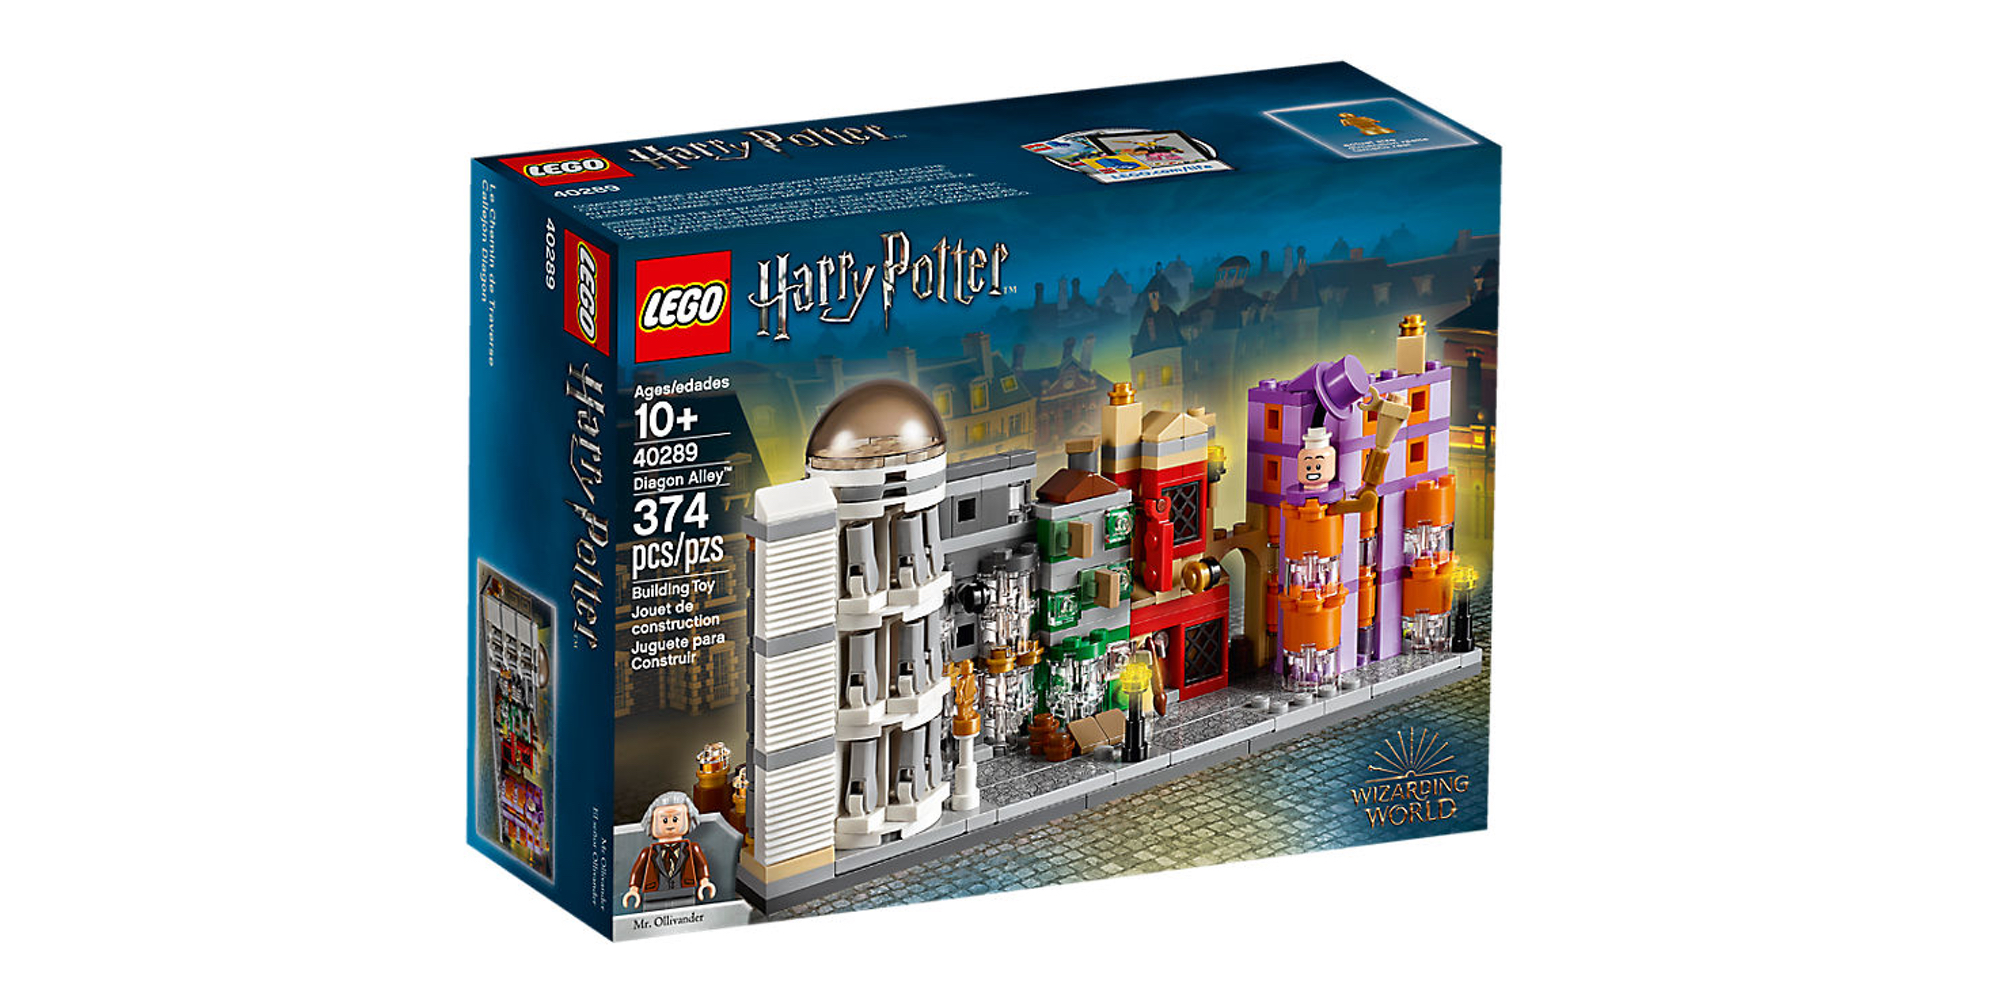 LEGO Diagon Alley Box Front